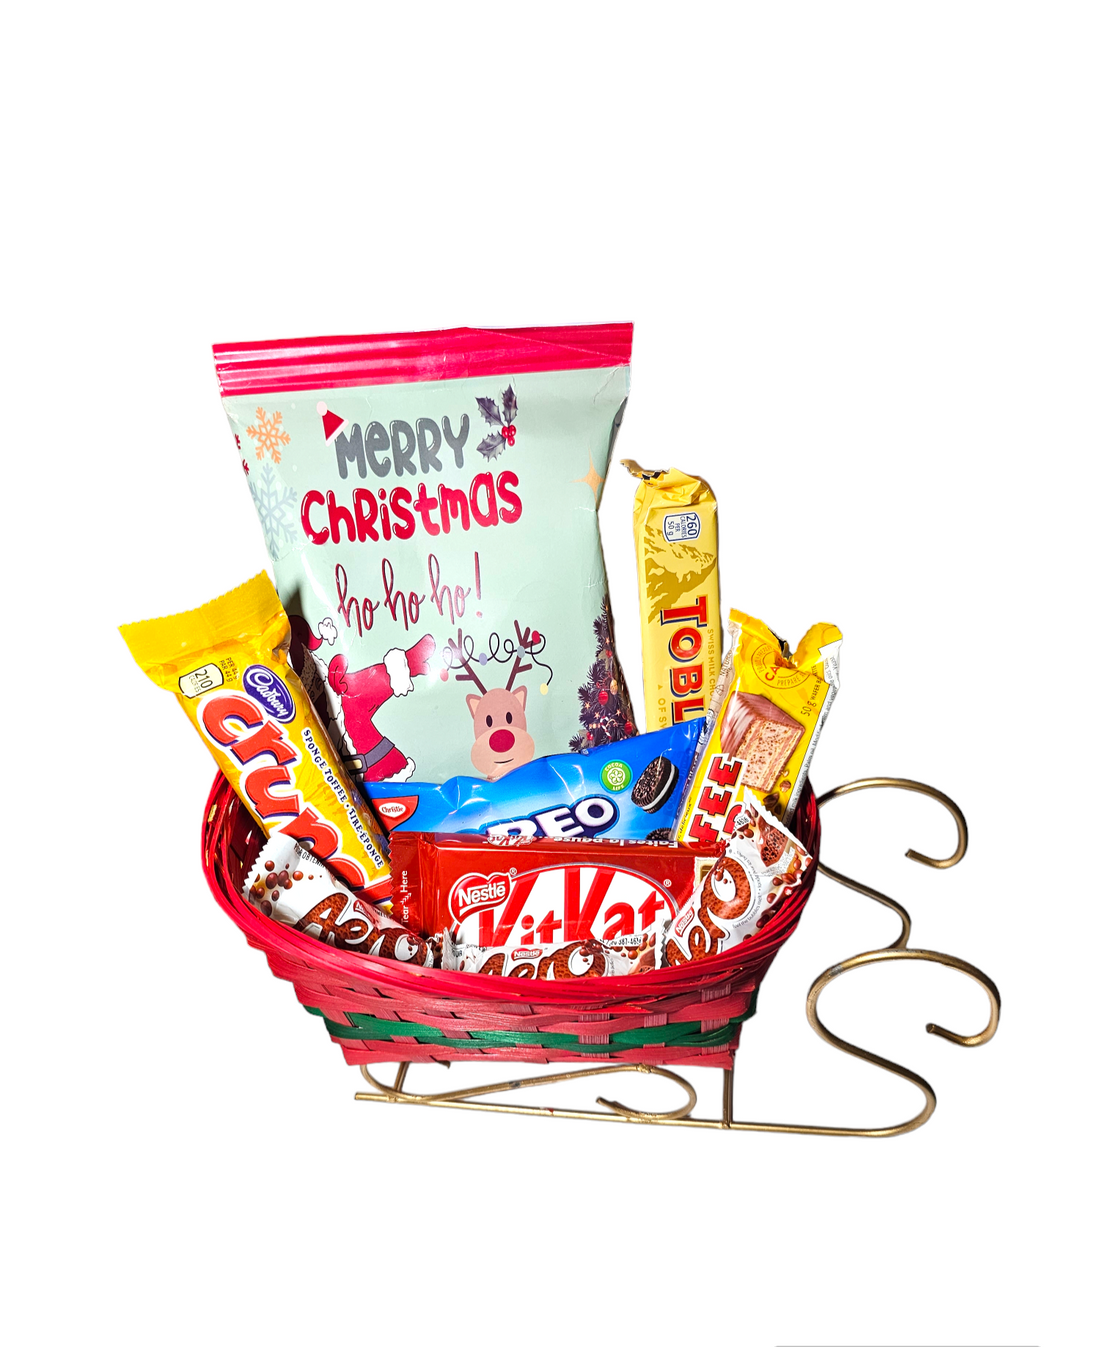 Christmas Sleigh Basket - Canadian Chocolates and customized chip bag